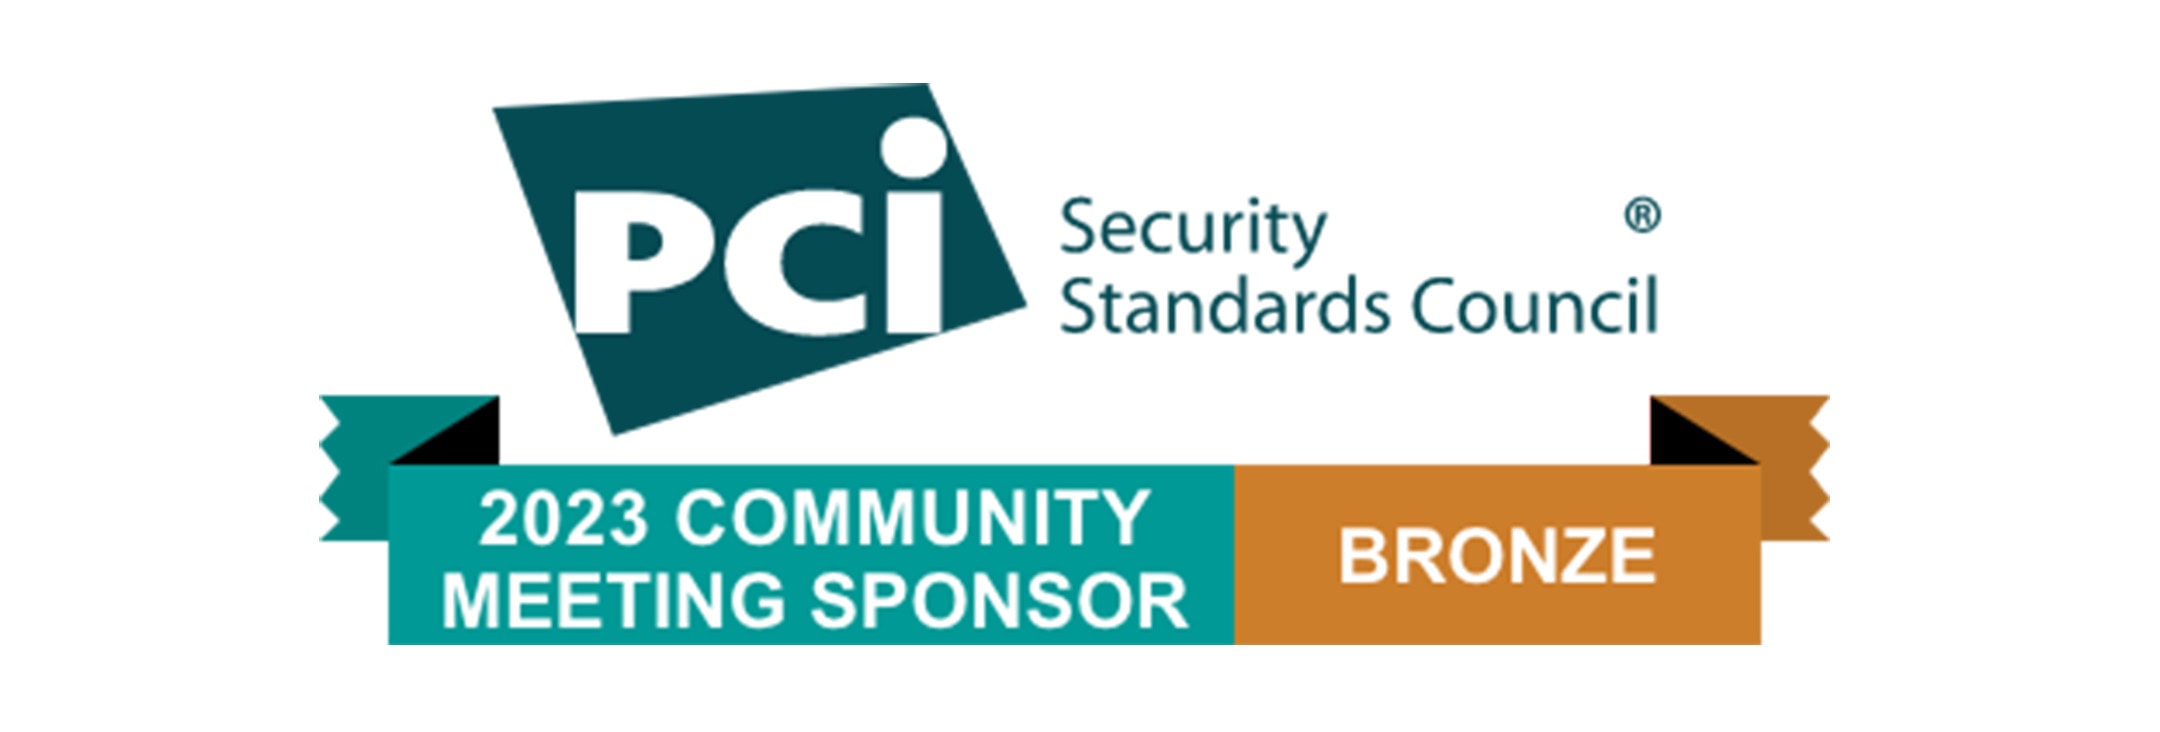 PCI SSC Europe Community Meeting Dublin usd AG